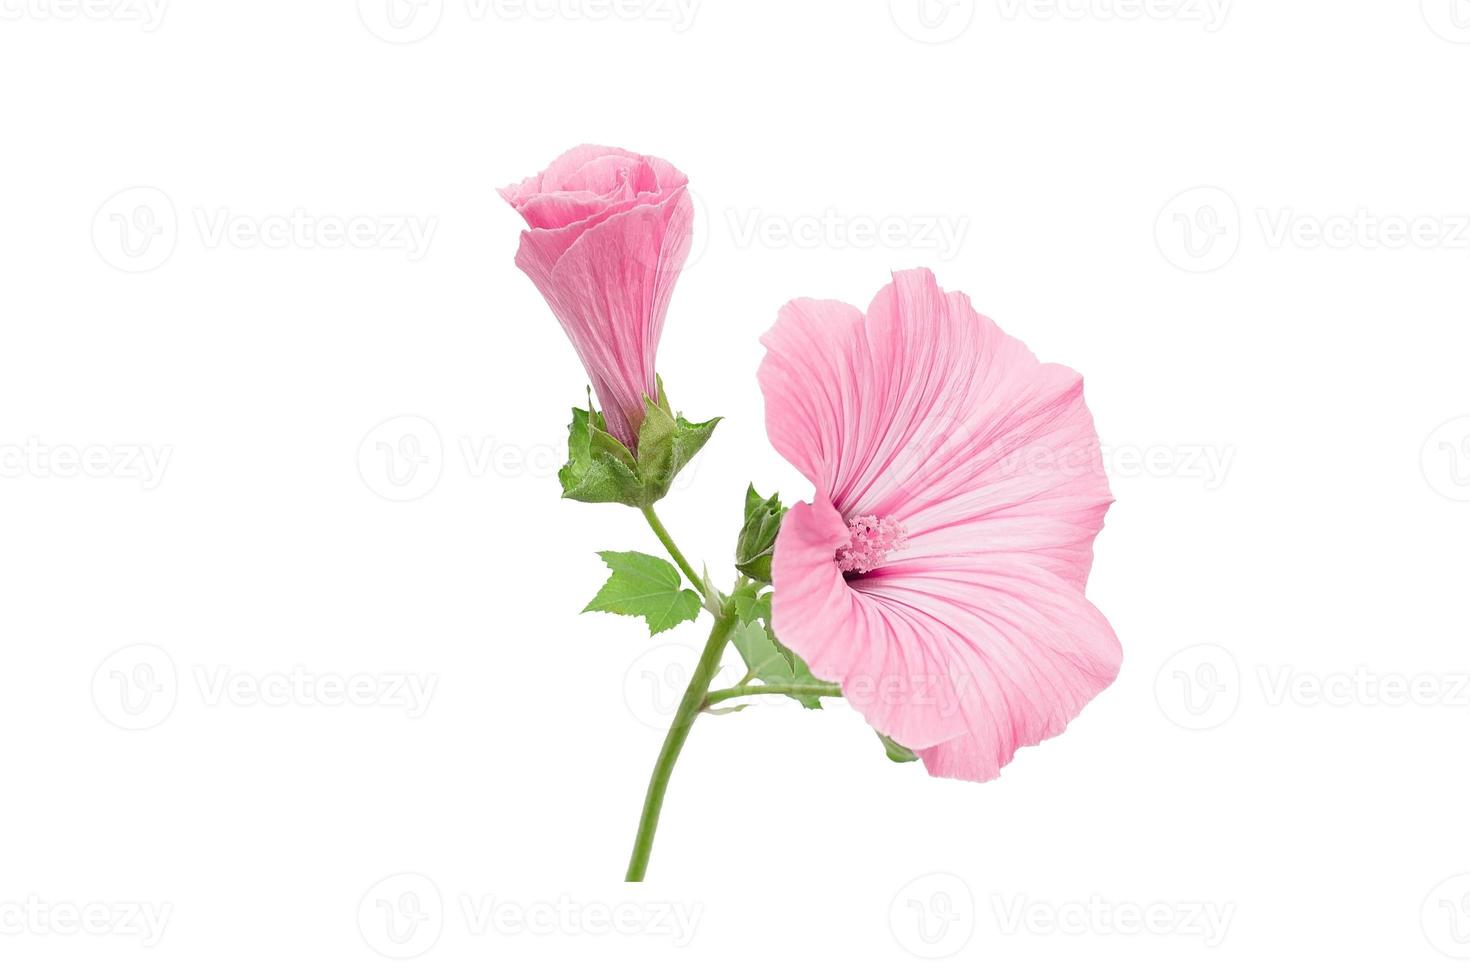 Rosa lavatera flor, capullo y follaje aislado contra un blanco foto